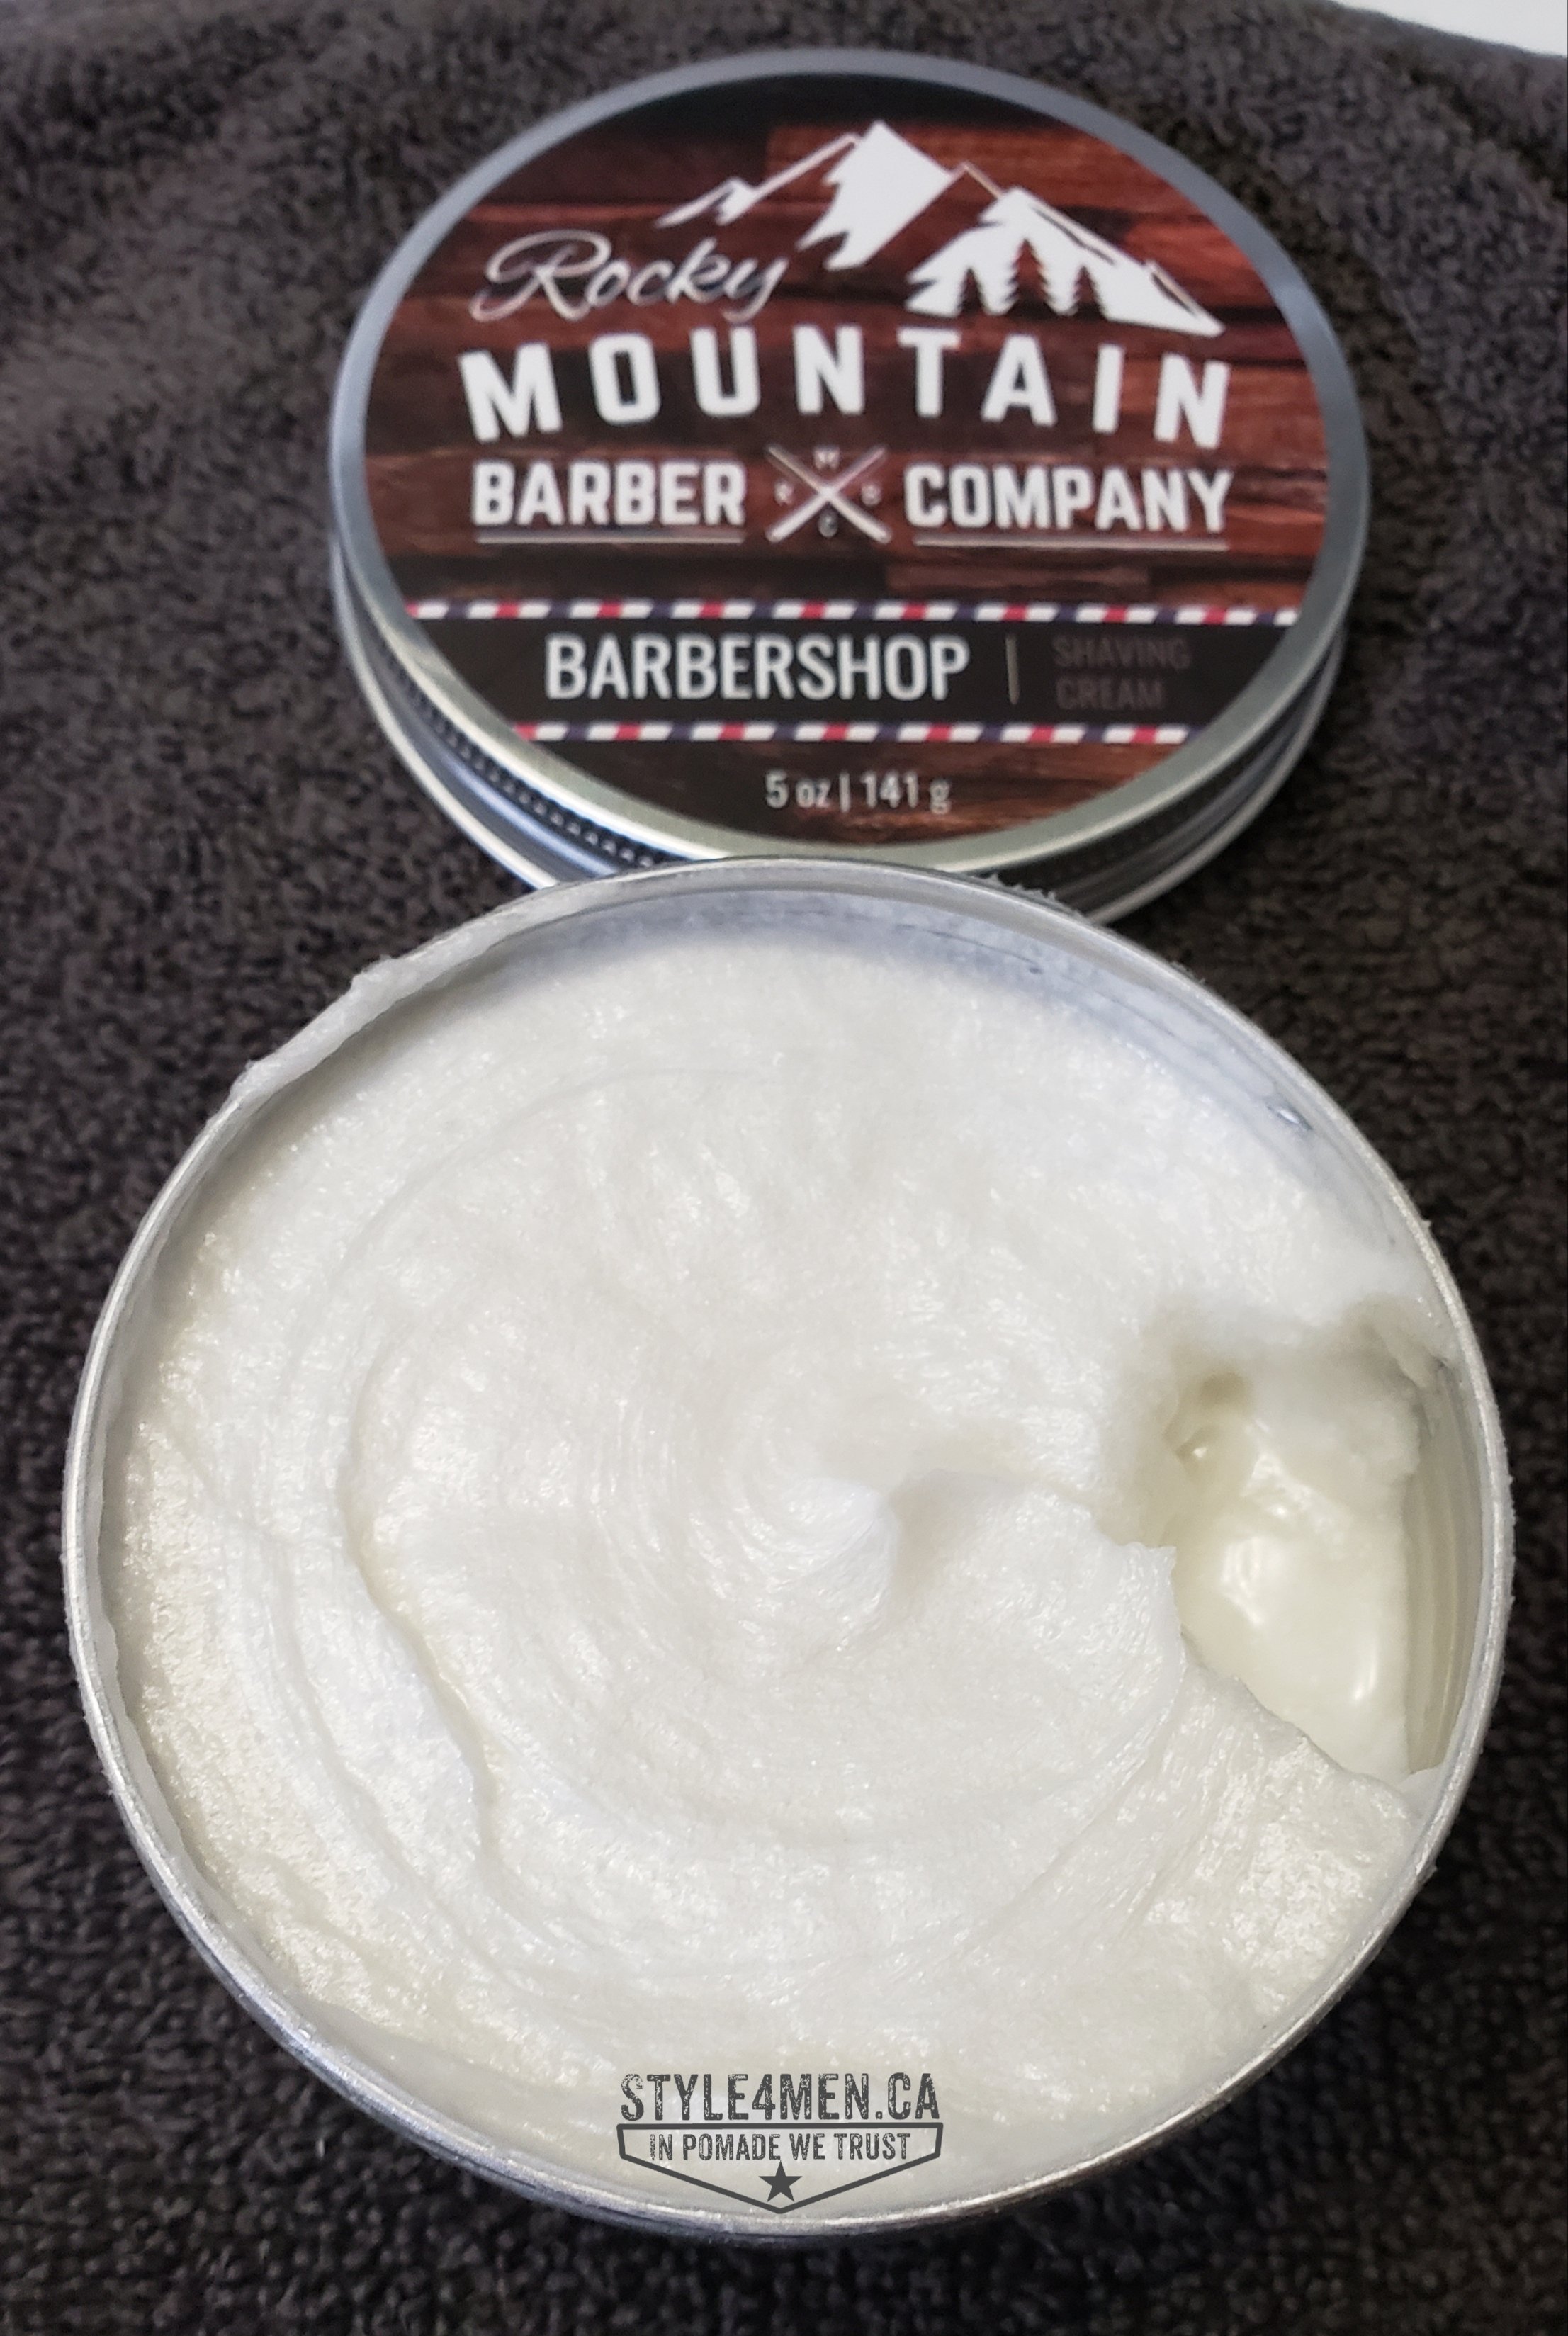 Rocky Mountain Barber Shaving Cream